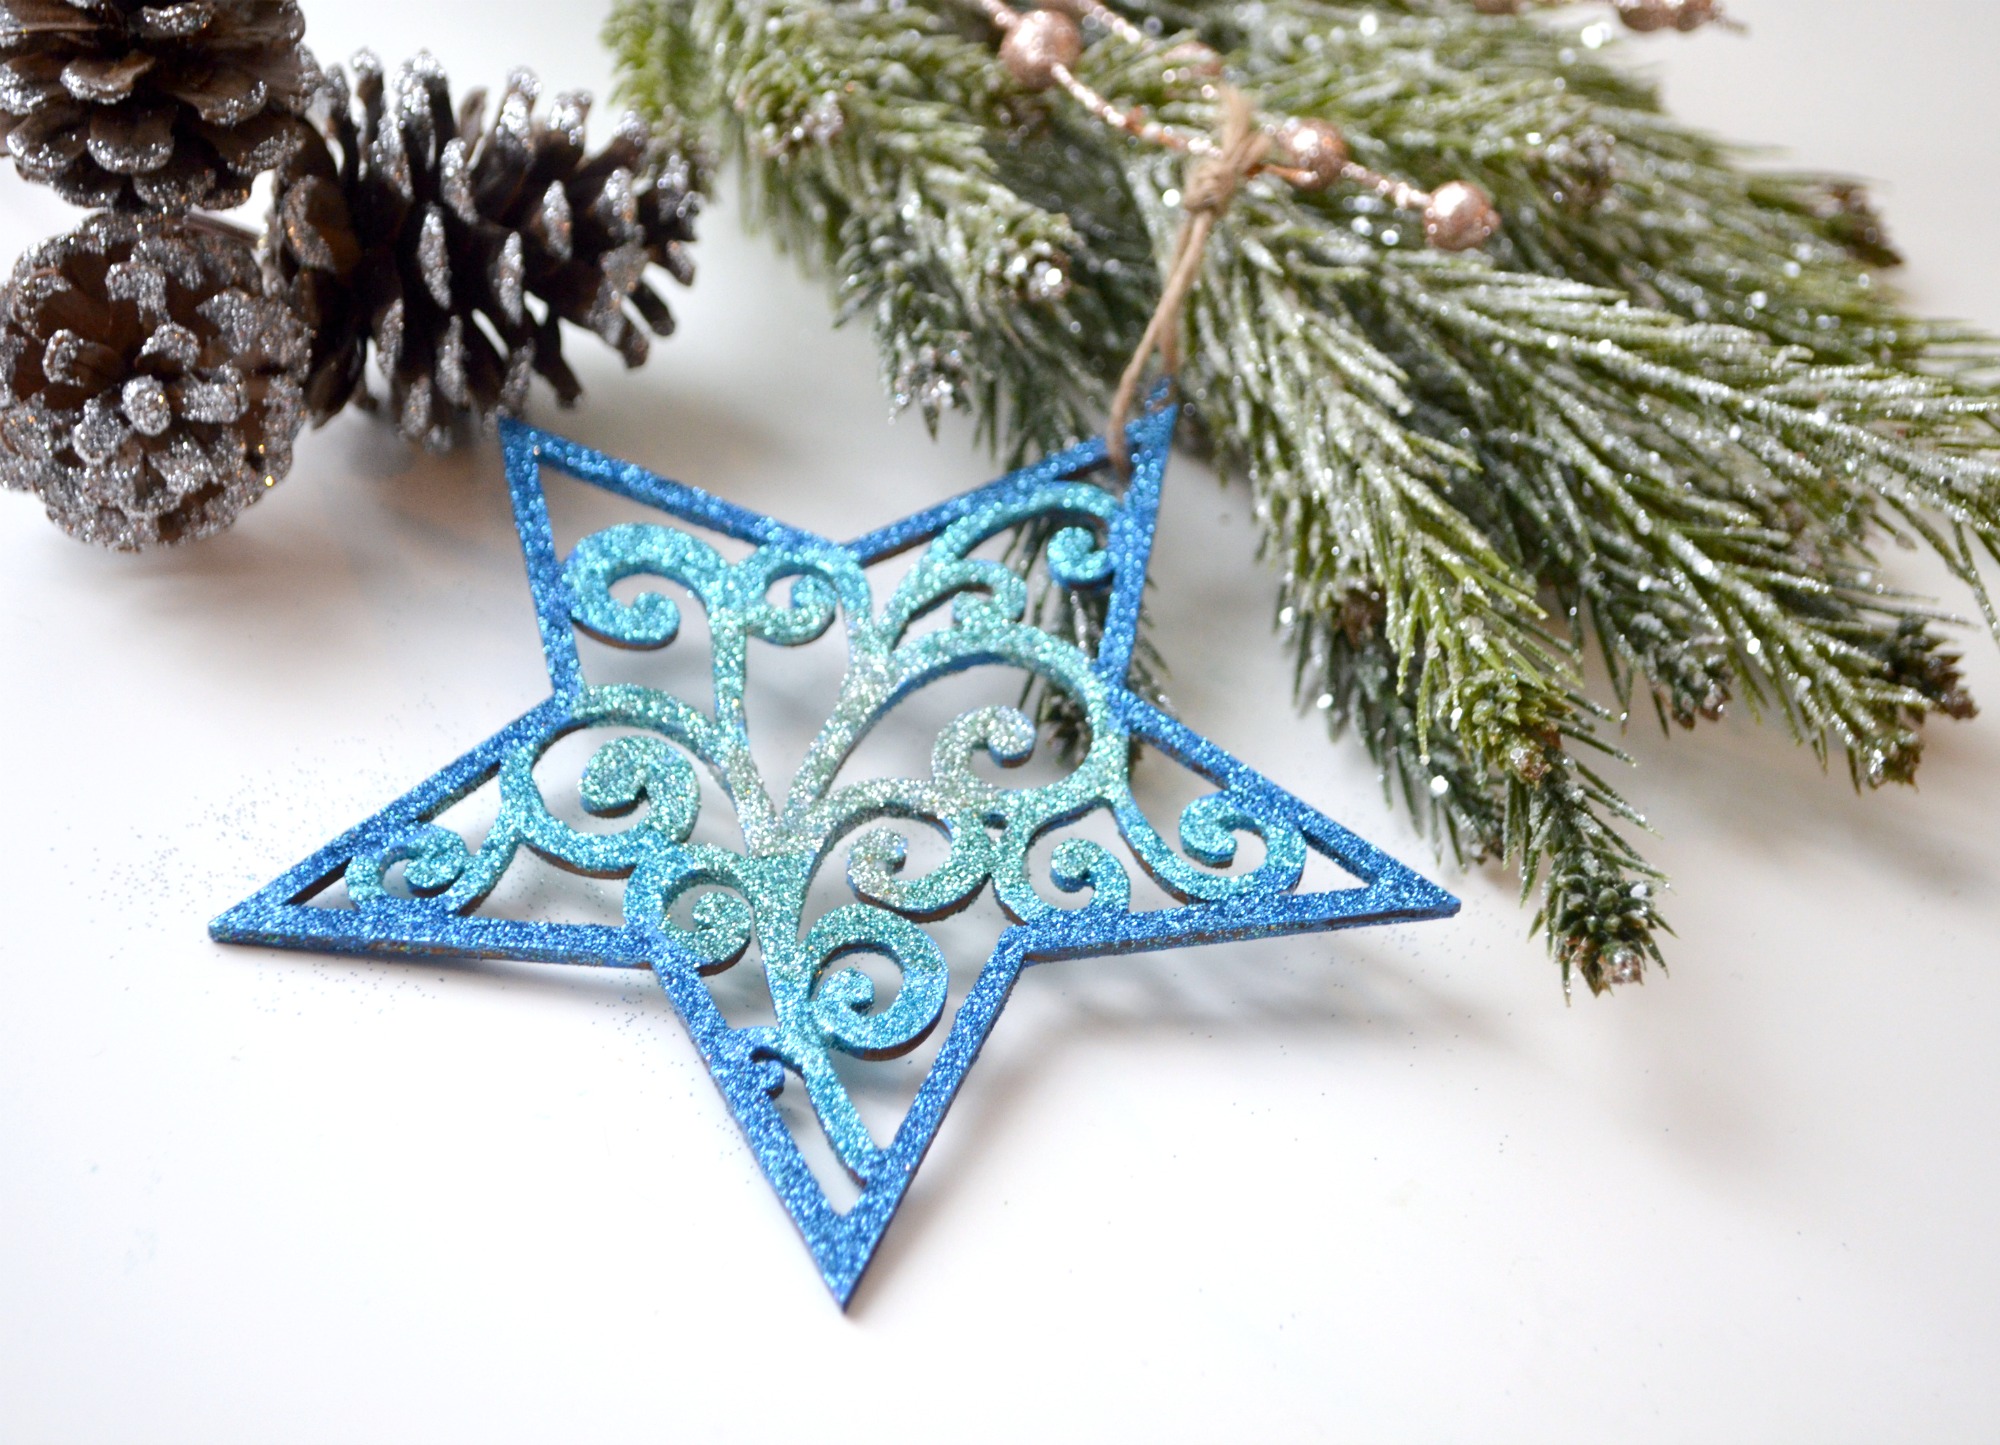 Glitter Star Ornament